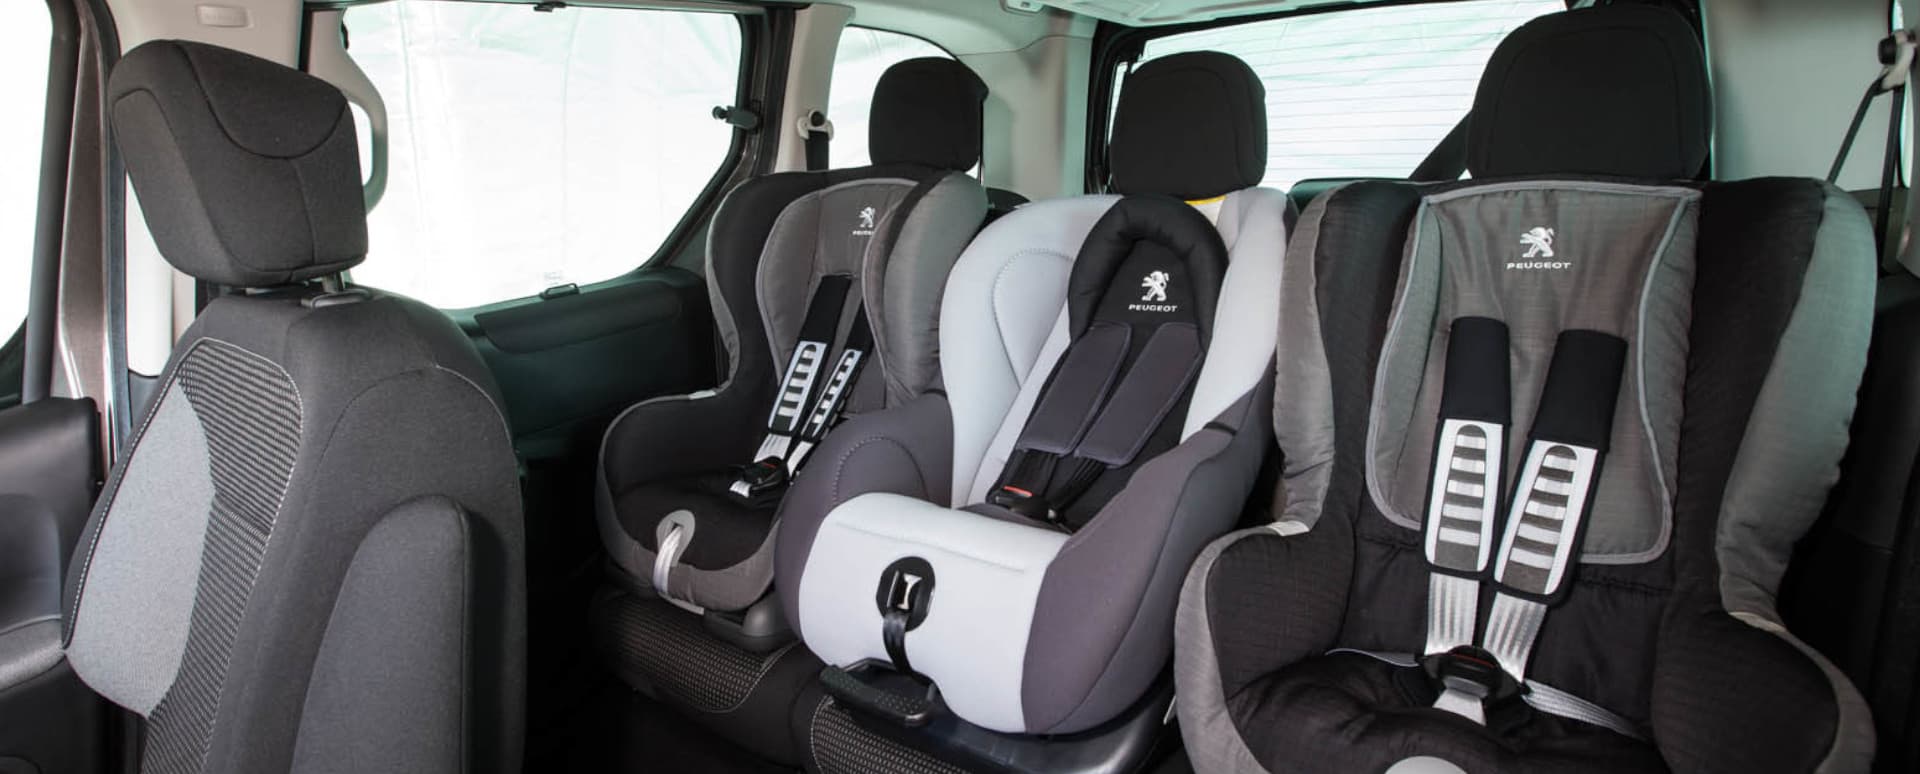 ISOFIX Rear Child Car Seats